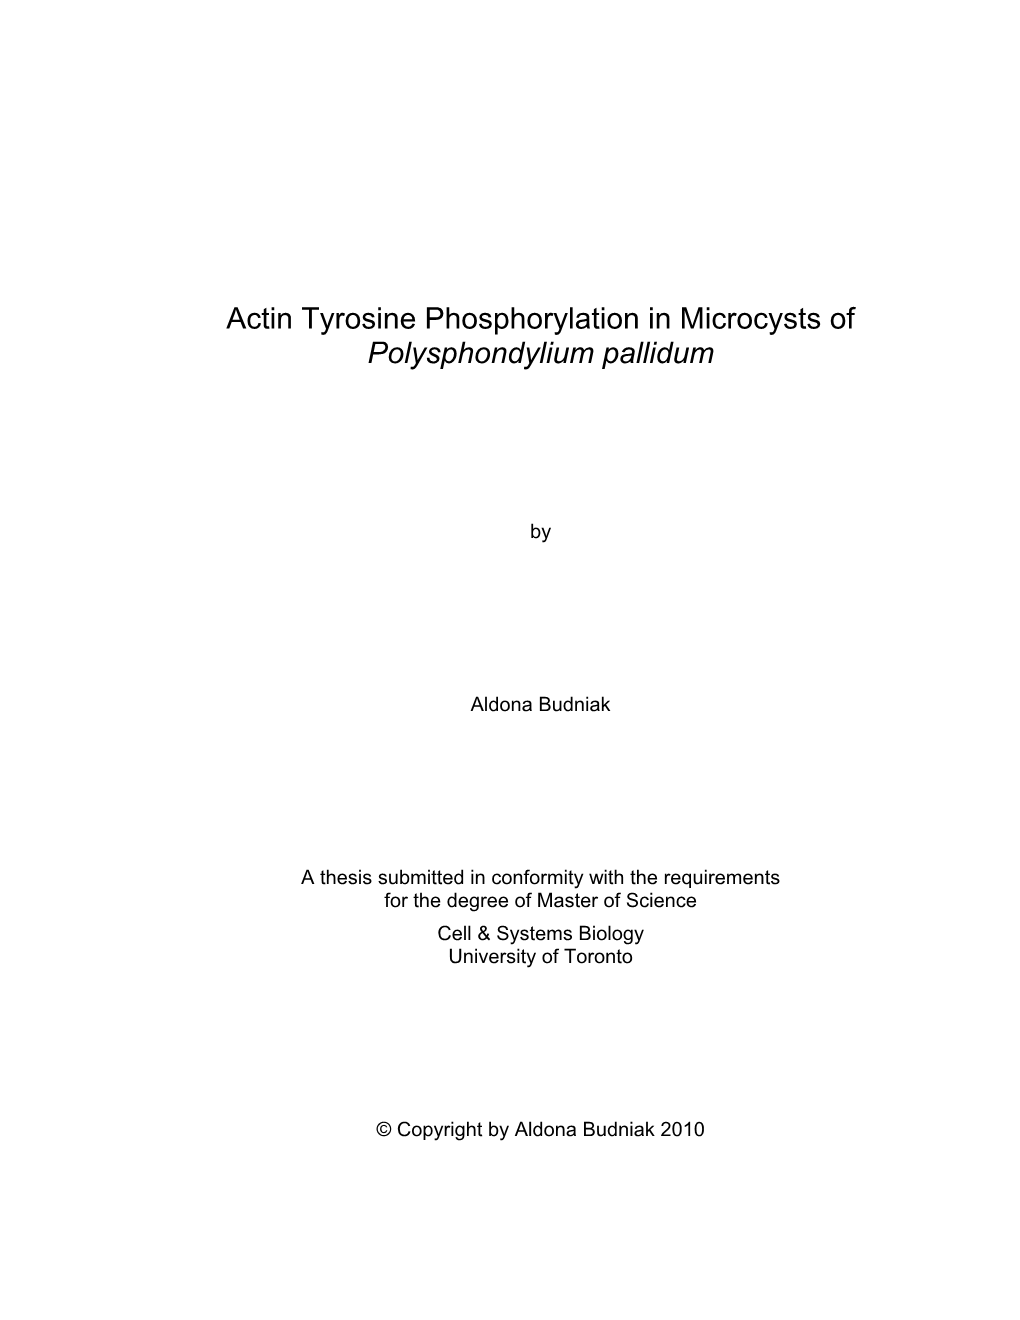 Actin Tyrosine Phosphorylation in Microcysts of Polysphondylium Pallidum